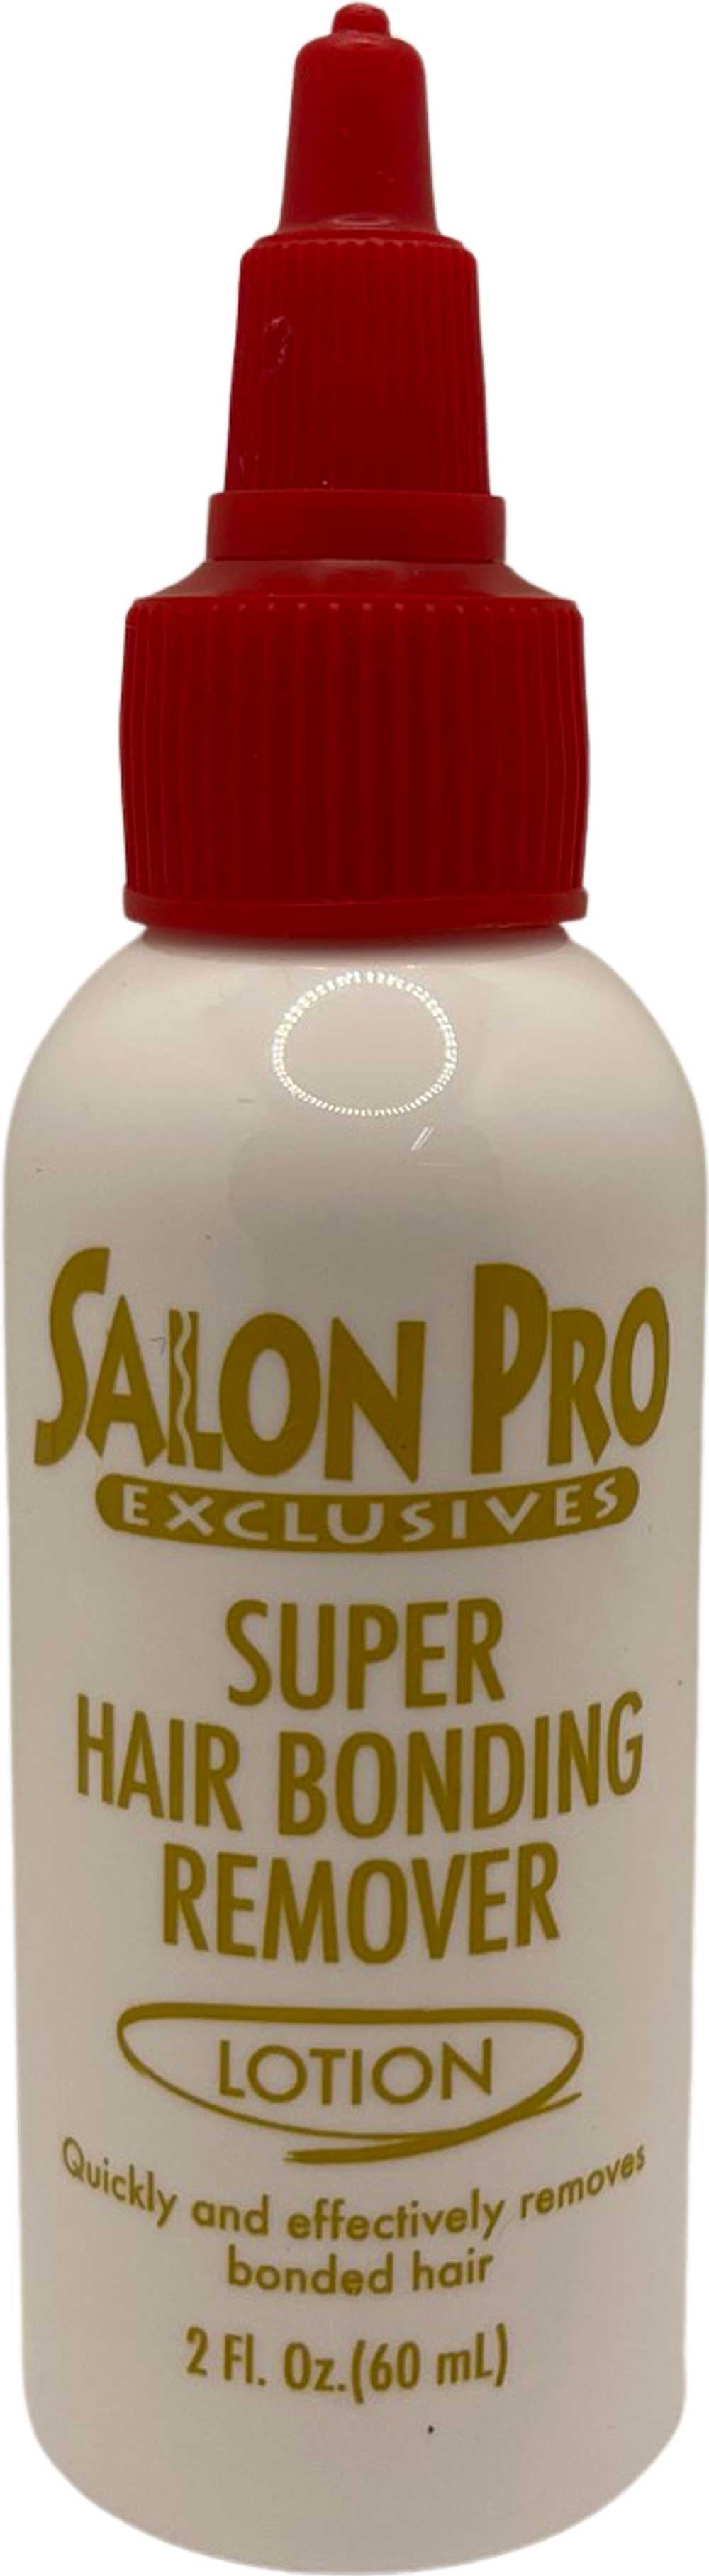 Salon Pro Super Hair Bonding Remover Lotion 2 Oz - Elevate Styles